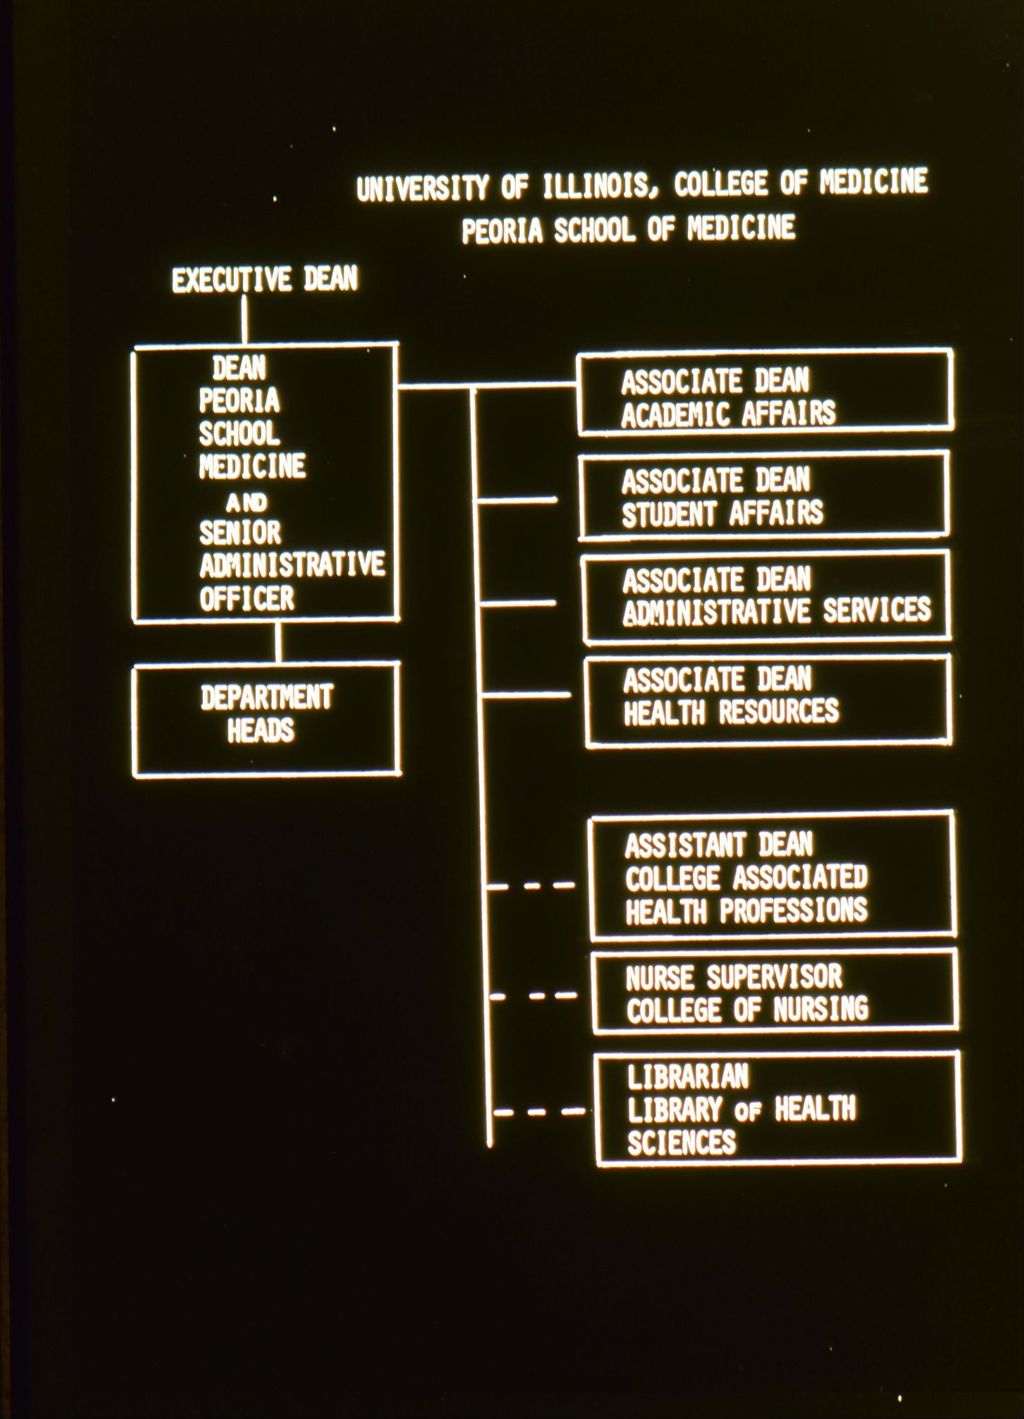 Miniature of Peoria School of Medicine organizational chart